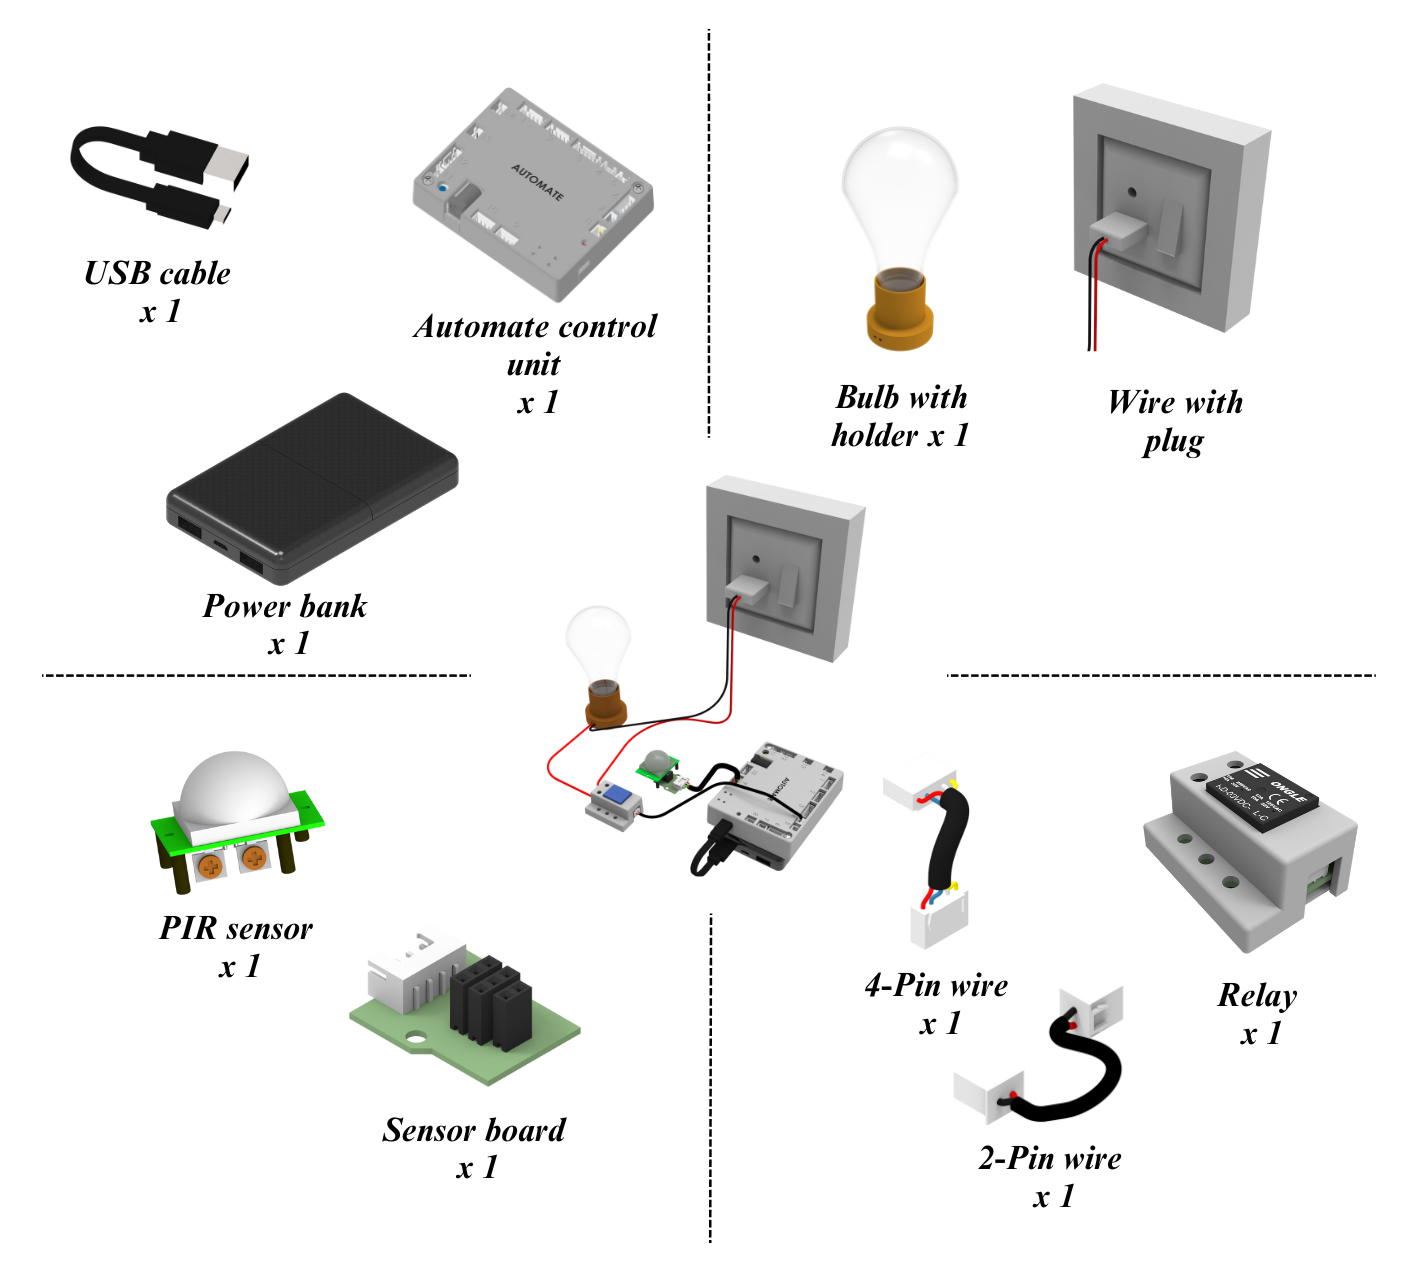 Light_bulb_on_off_with_PIR_sensor_list_of_items